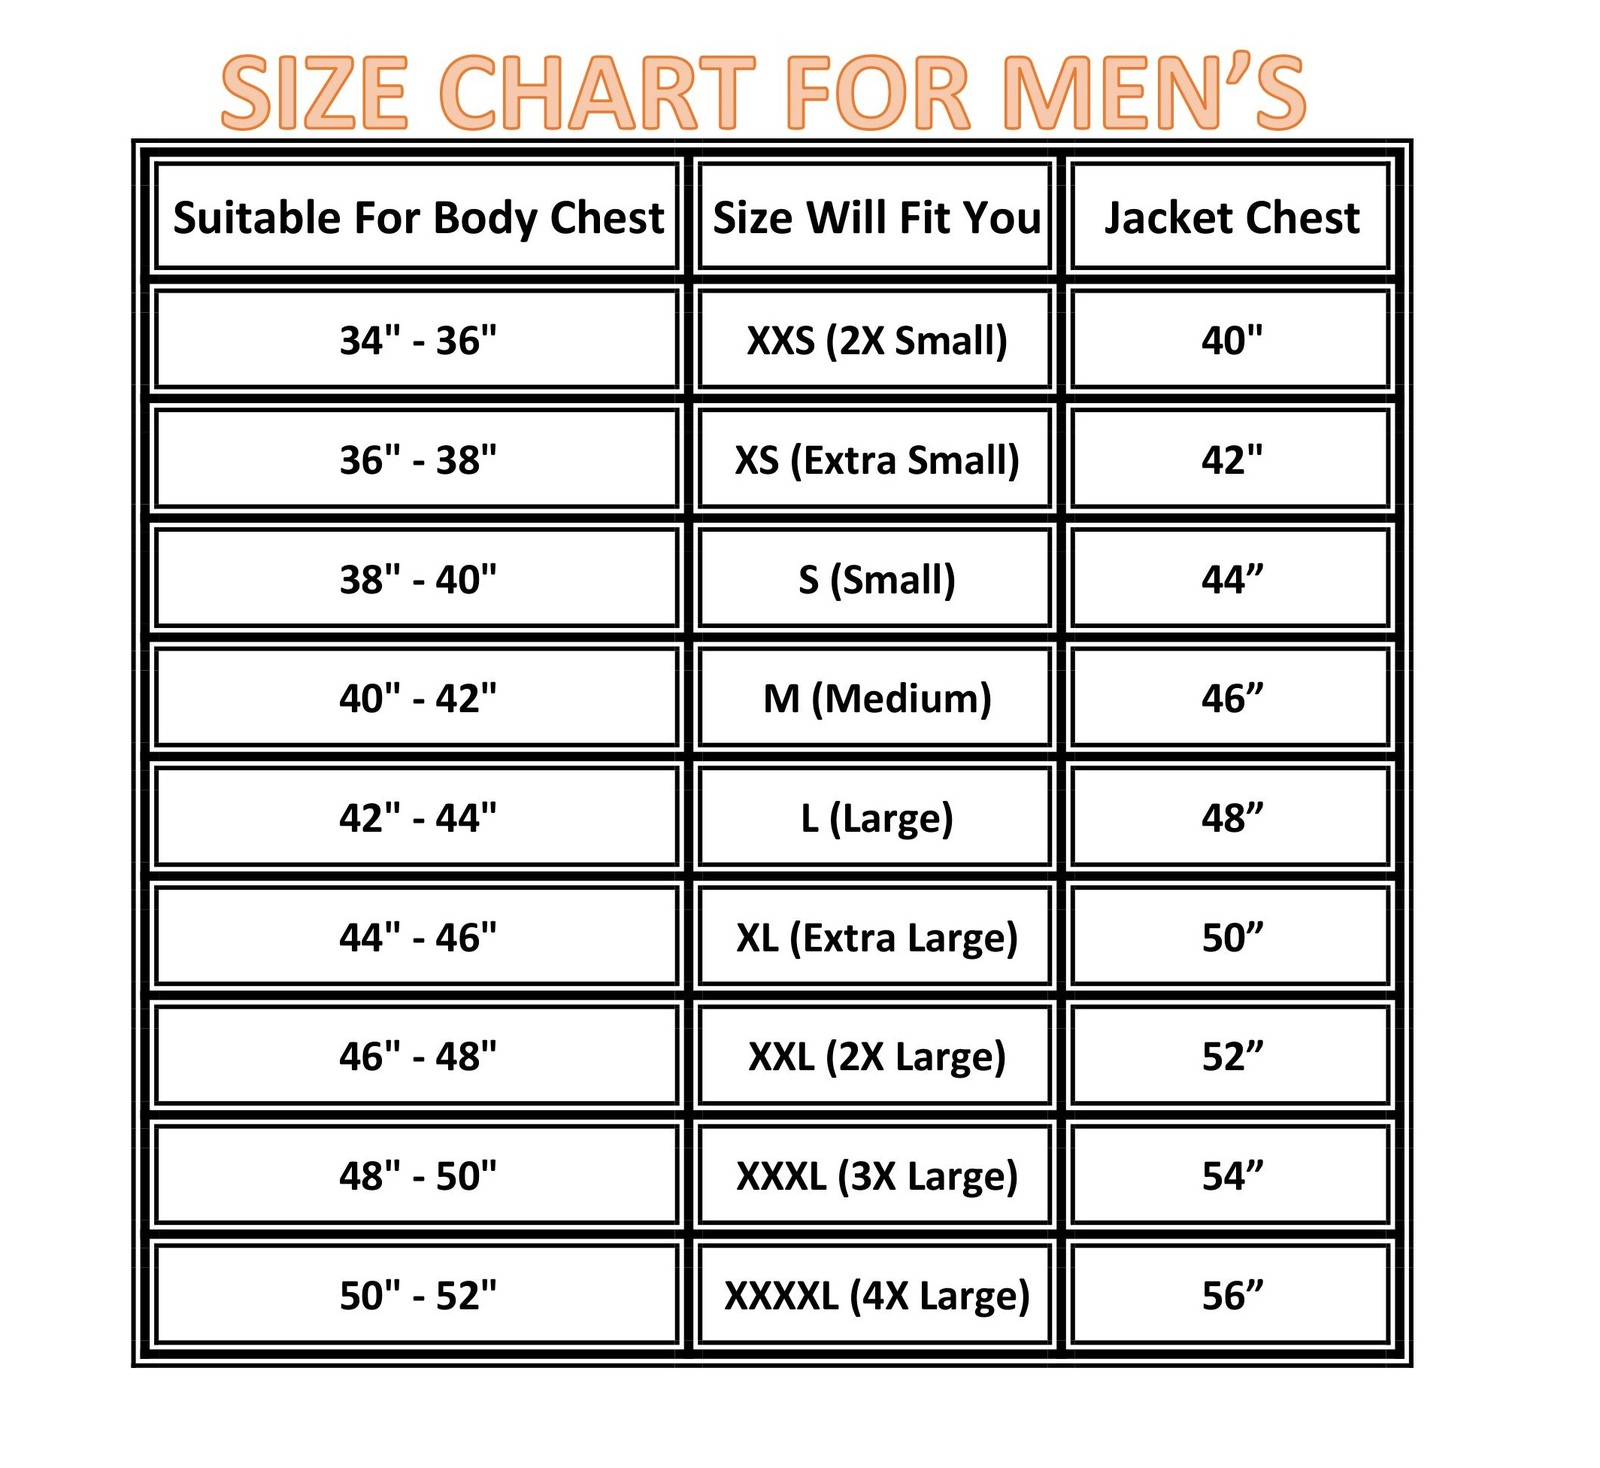 Neff Letterman Jackets Size Chart